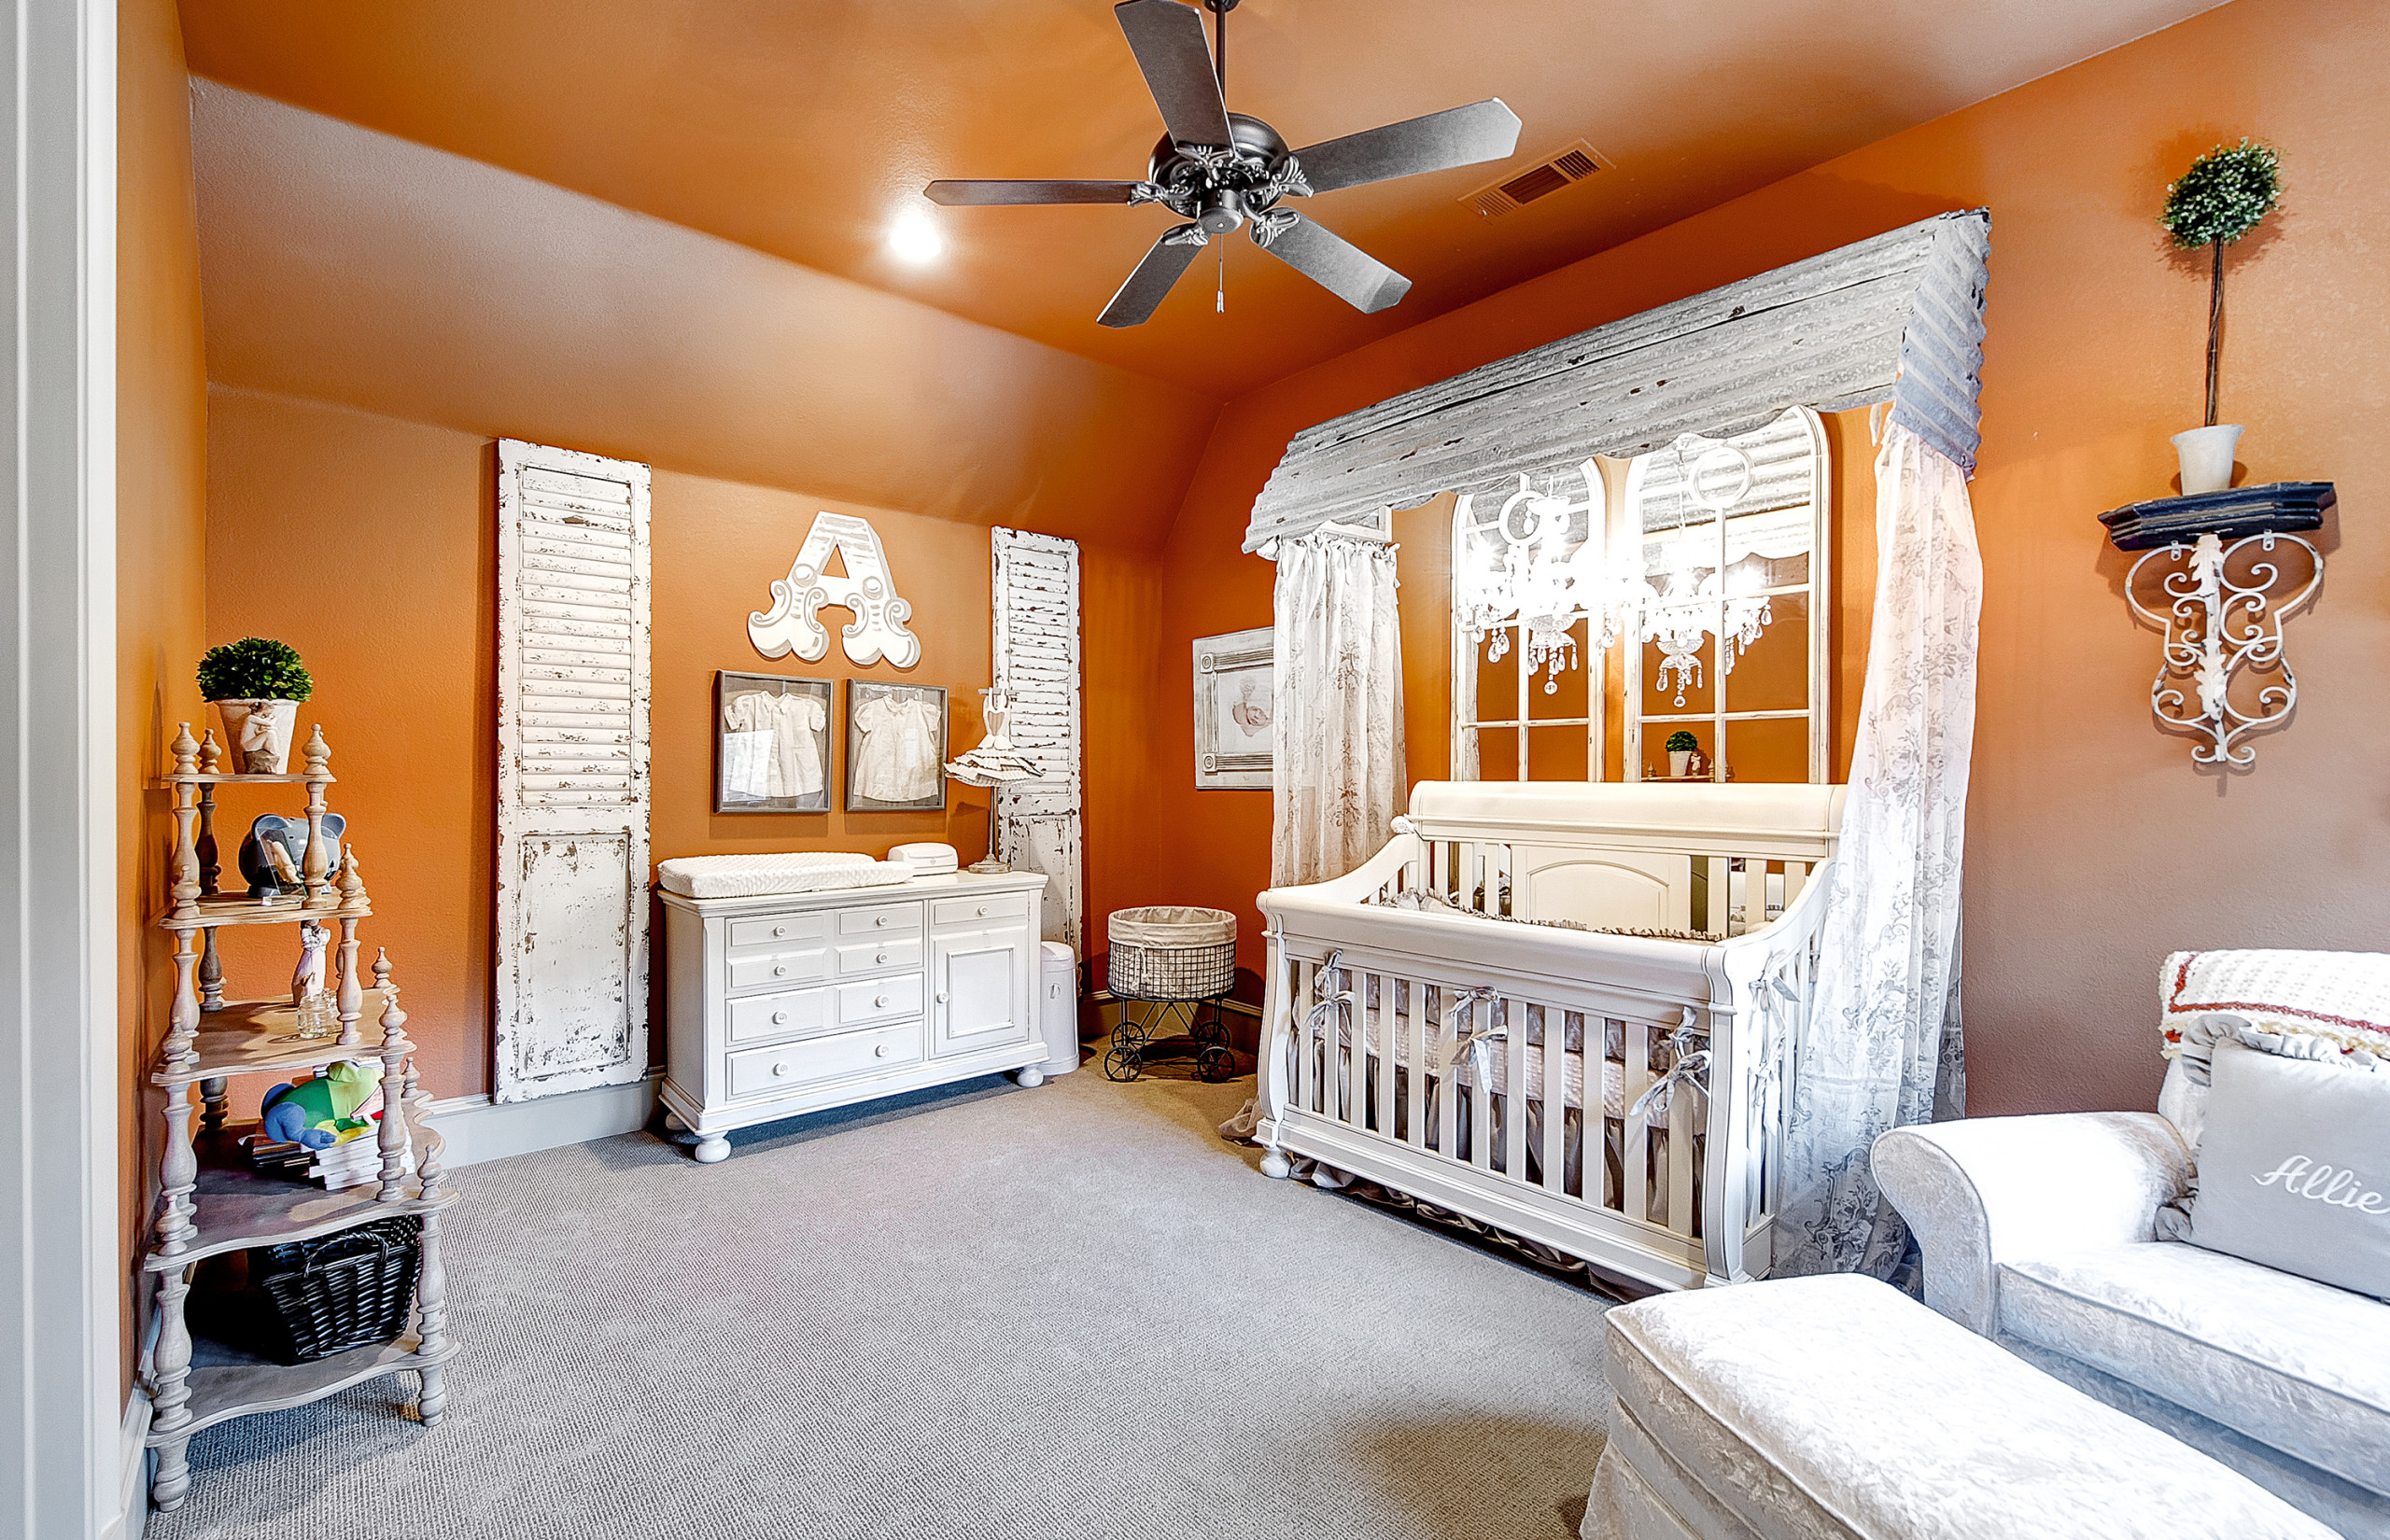 75 Beautiful Nursery Room with Orange Walls Ideas & Designs - February 2023  | Houzz AU